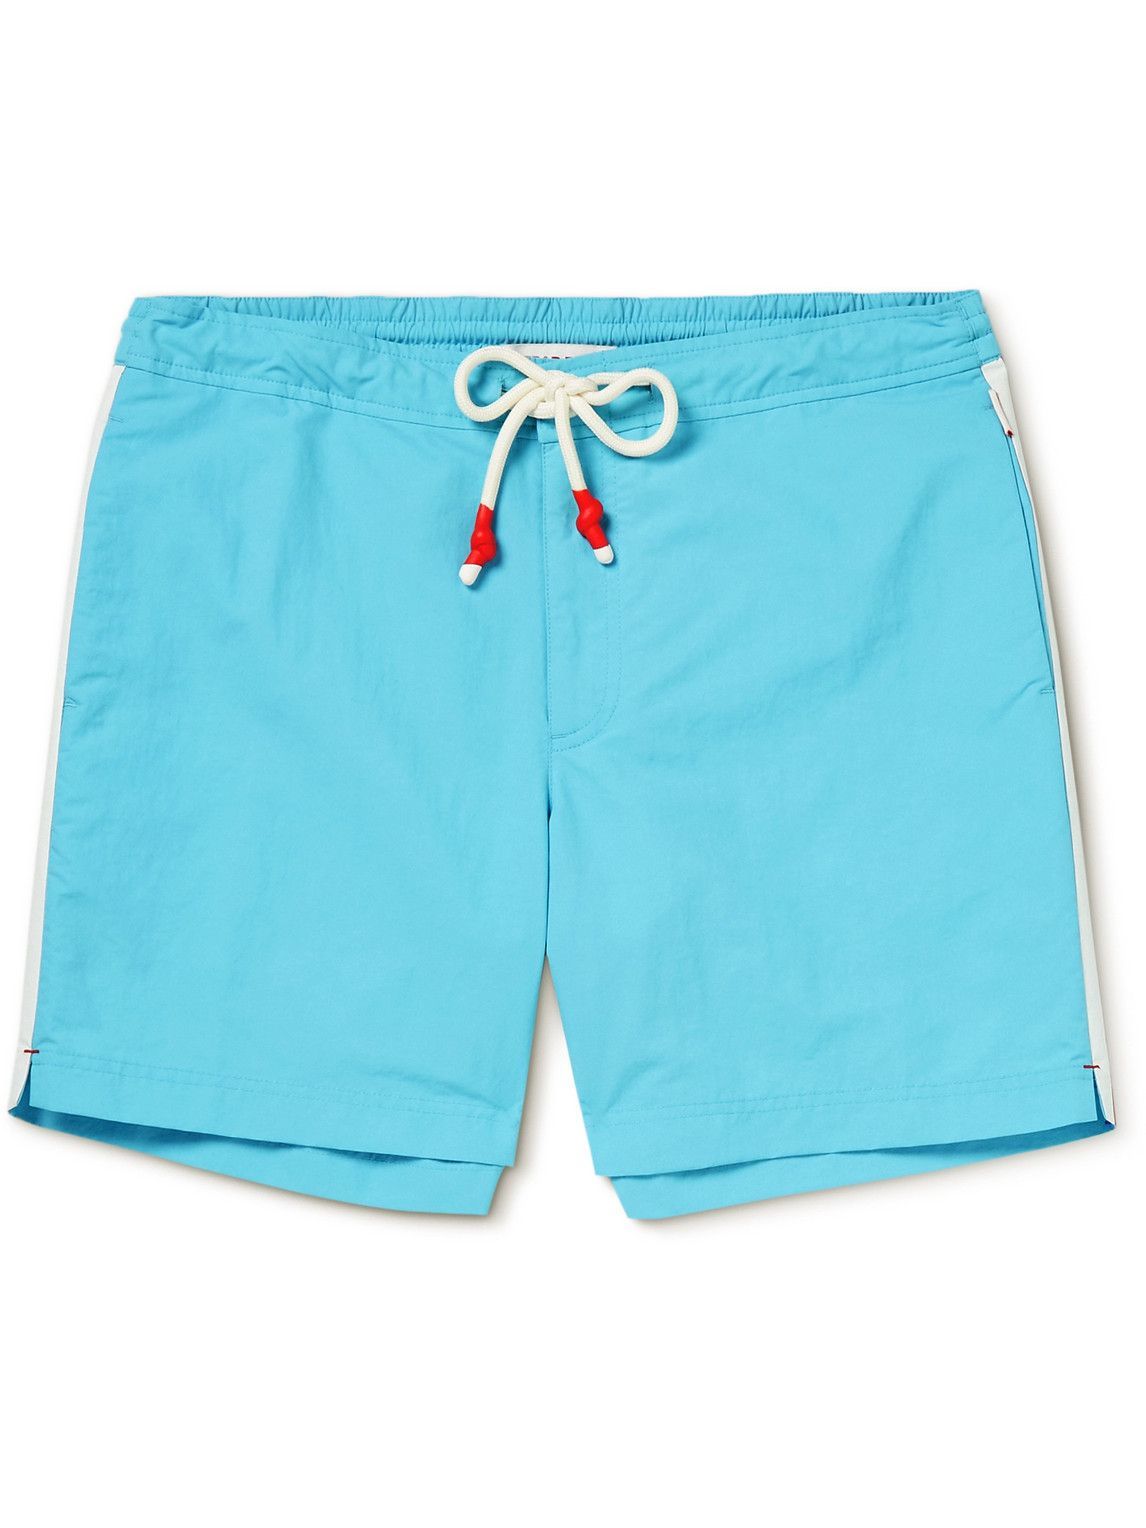 Orlebar Brown - Standard Mid-Length Piped Swim Shorts - Blue Orlebar Brown